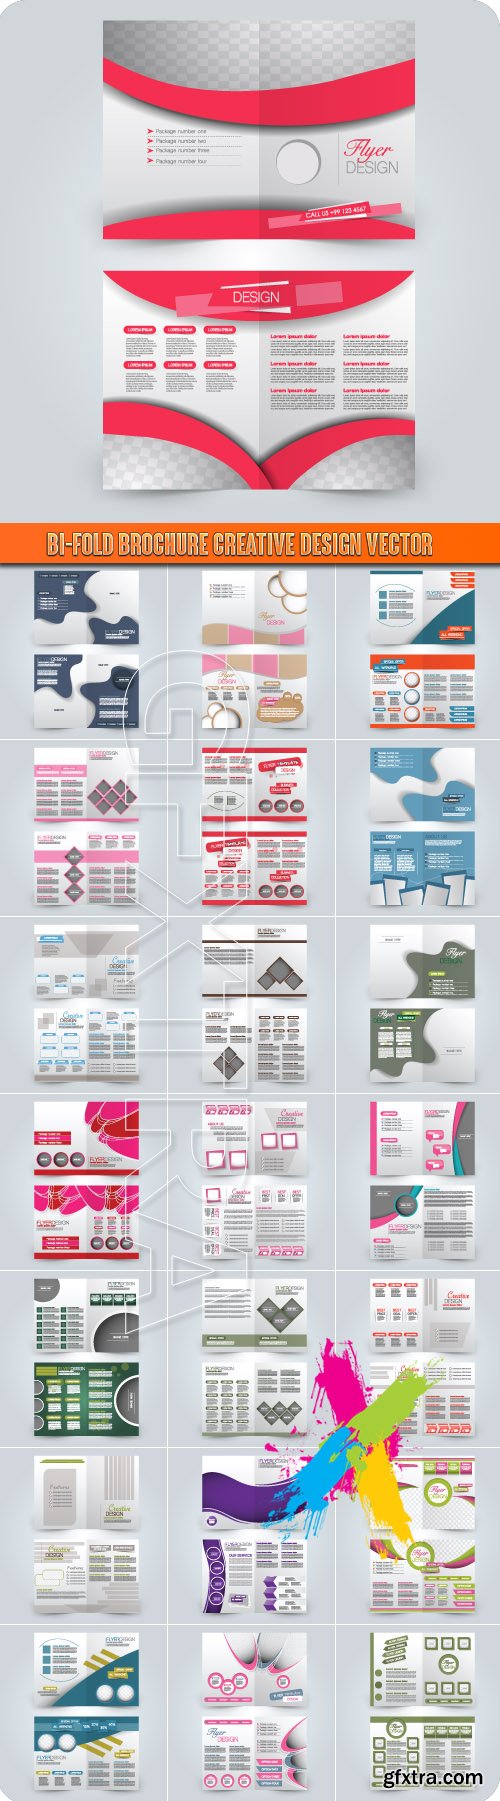 Bi-fold brochure creative design vector